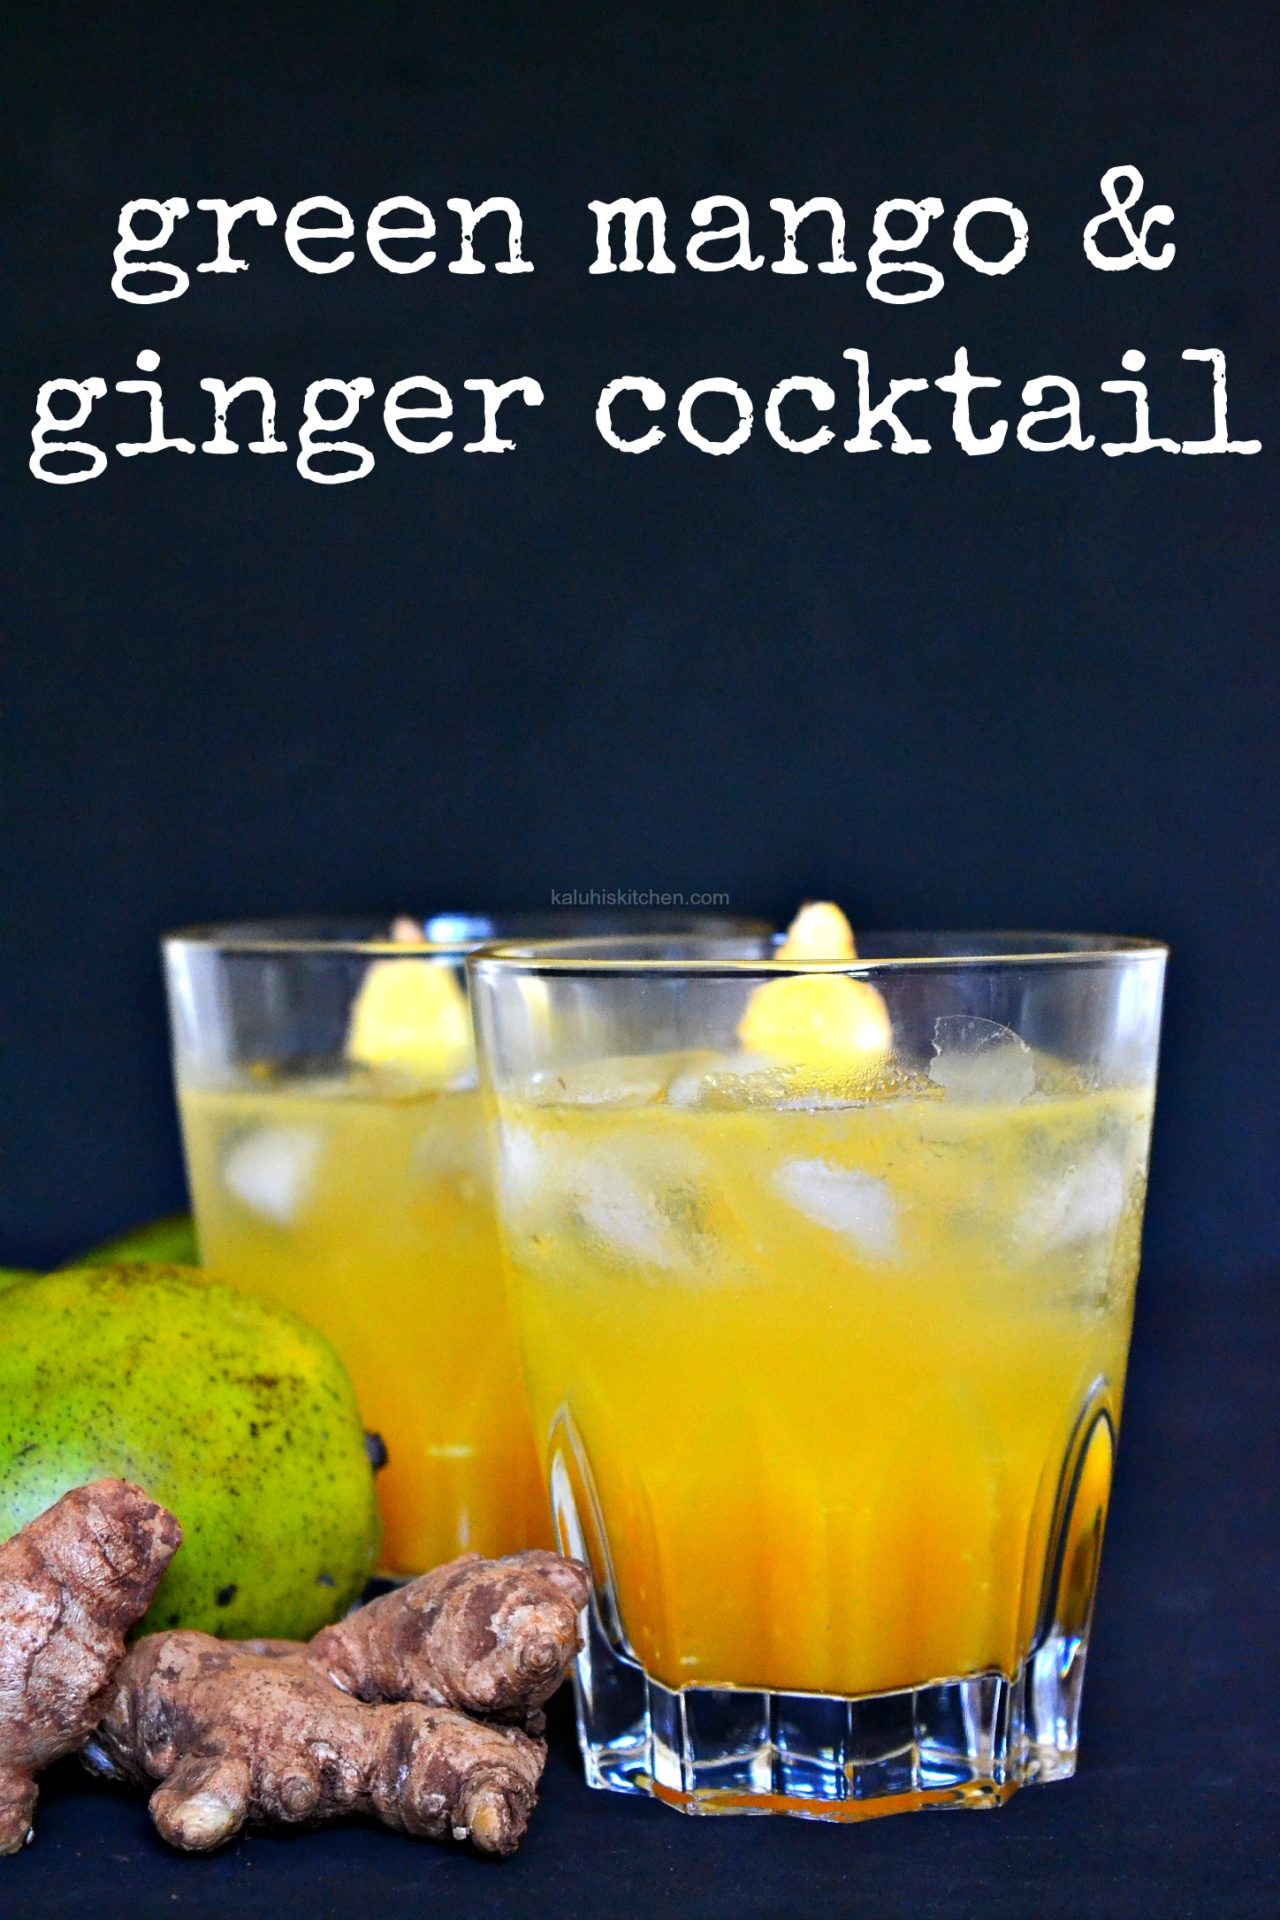 green mango and ginger cocktails_kenyan cocktails_dawa_best african food bloggers_kaluhiskitchen.com